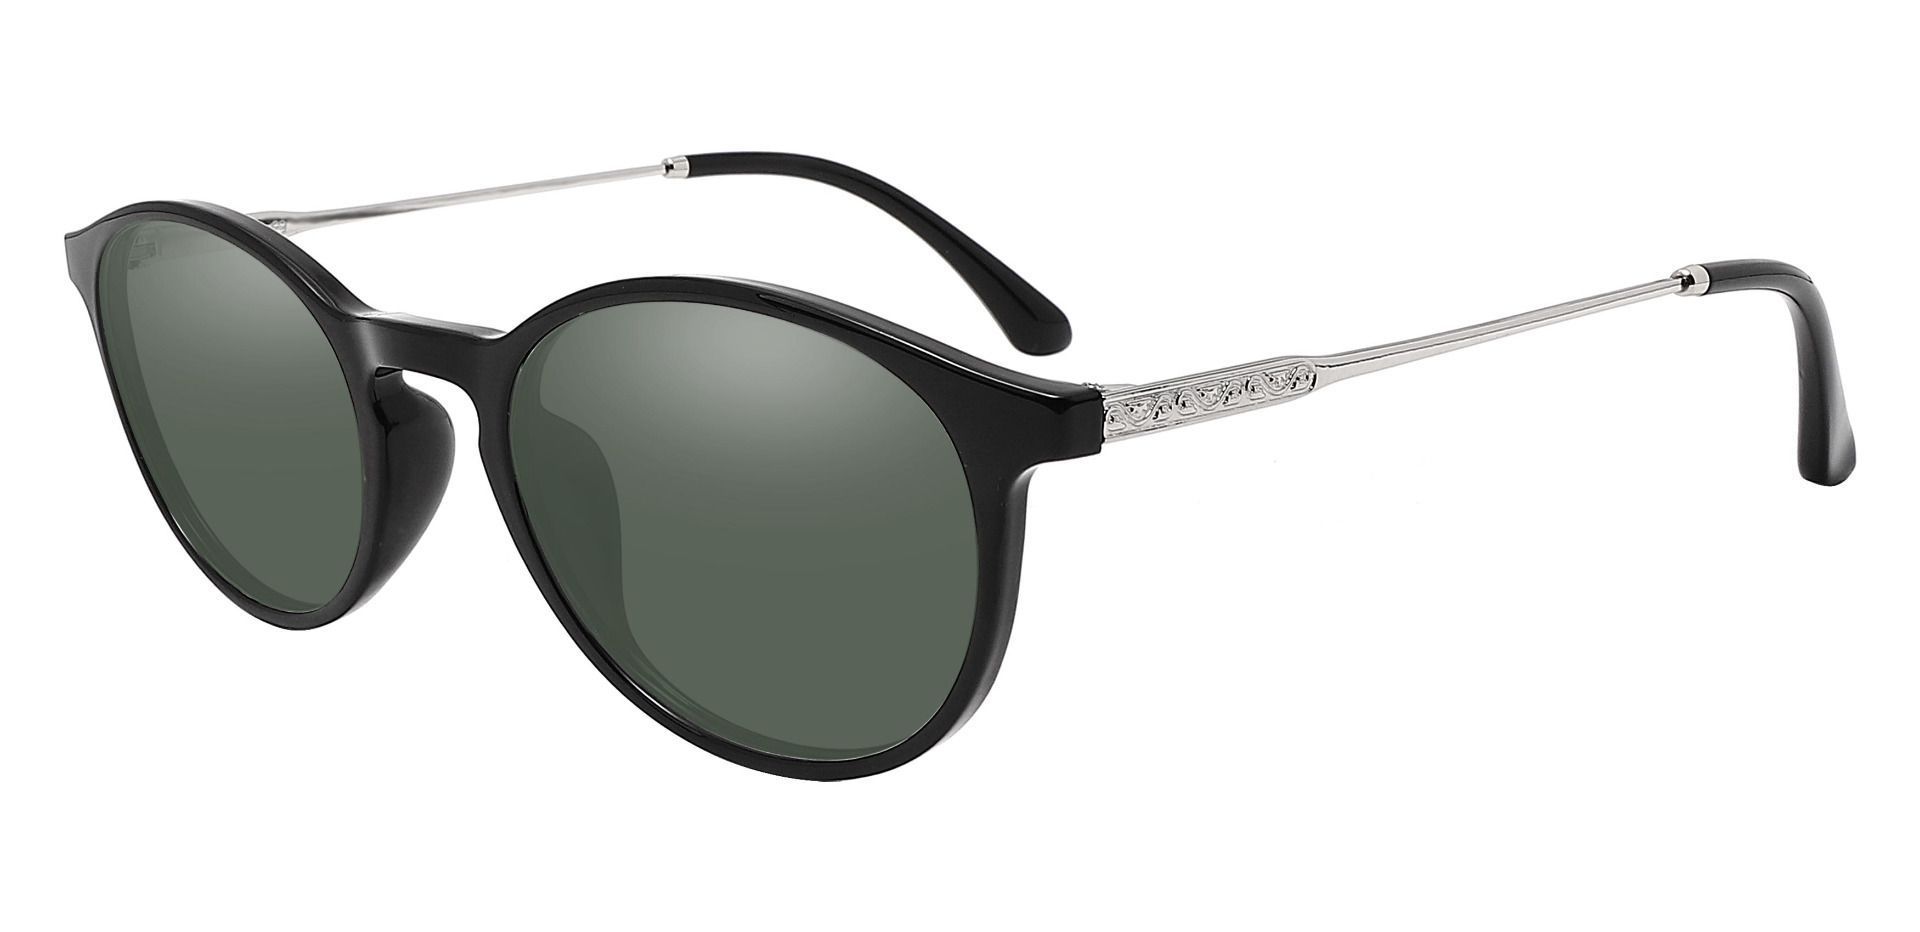 Felton Oval Lined Bifocal Sunglasses - Black Frame With Green Lenses